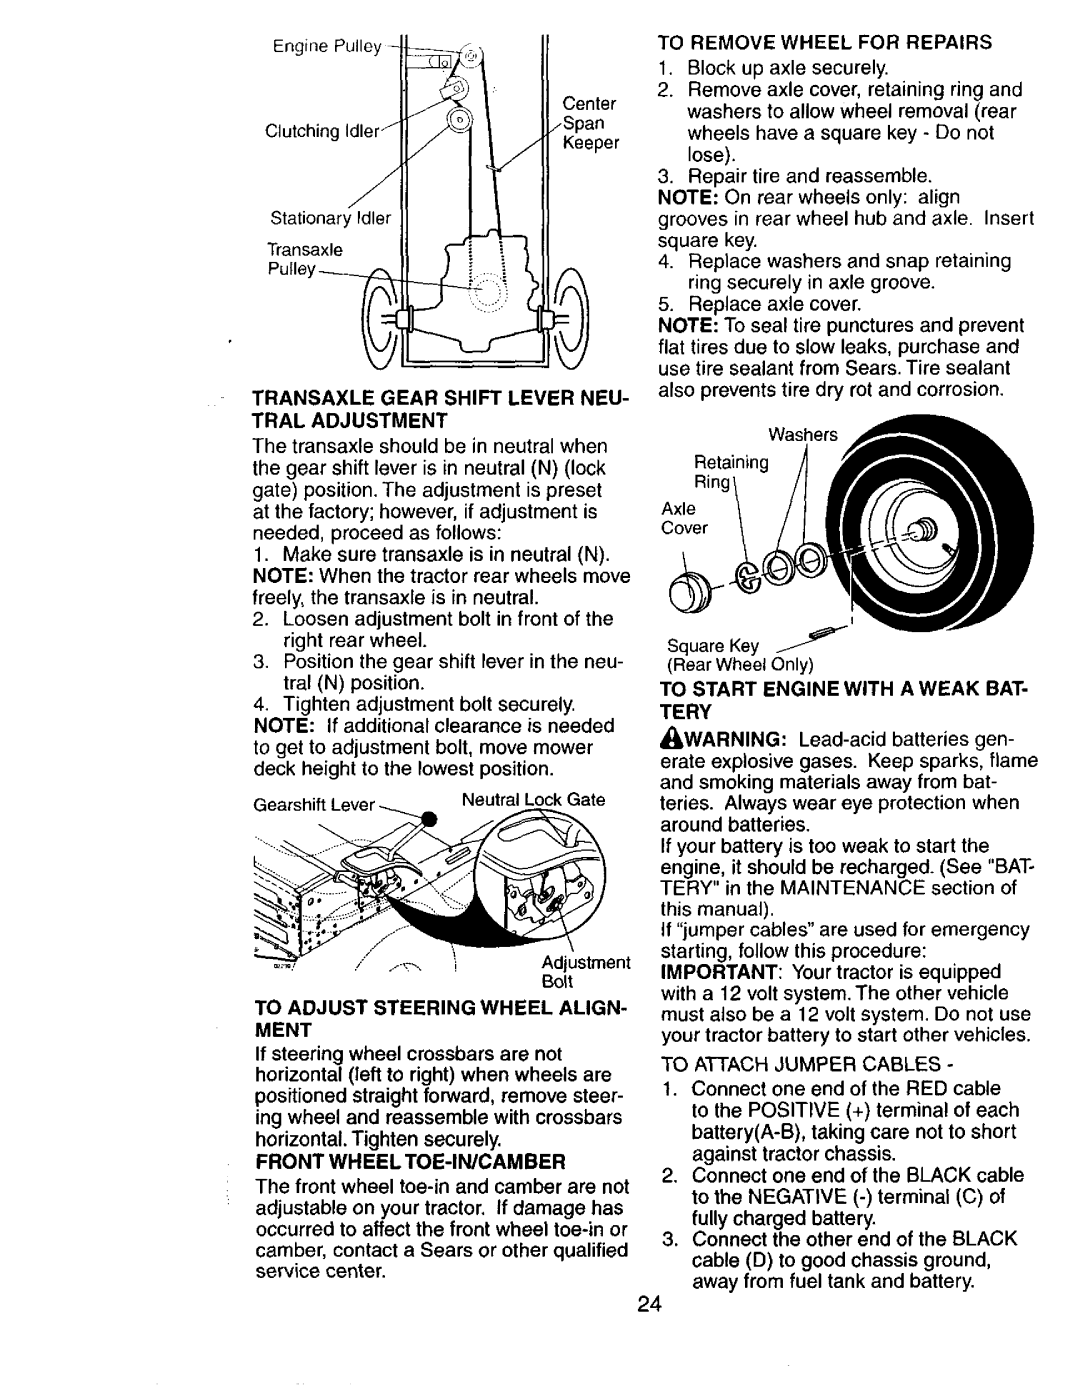 Craftsman 917272673 owner manual Transaxle Gear Shift Lever Neu- Tral Adjustment, To Adjust Steering Wheel Align- Ment 